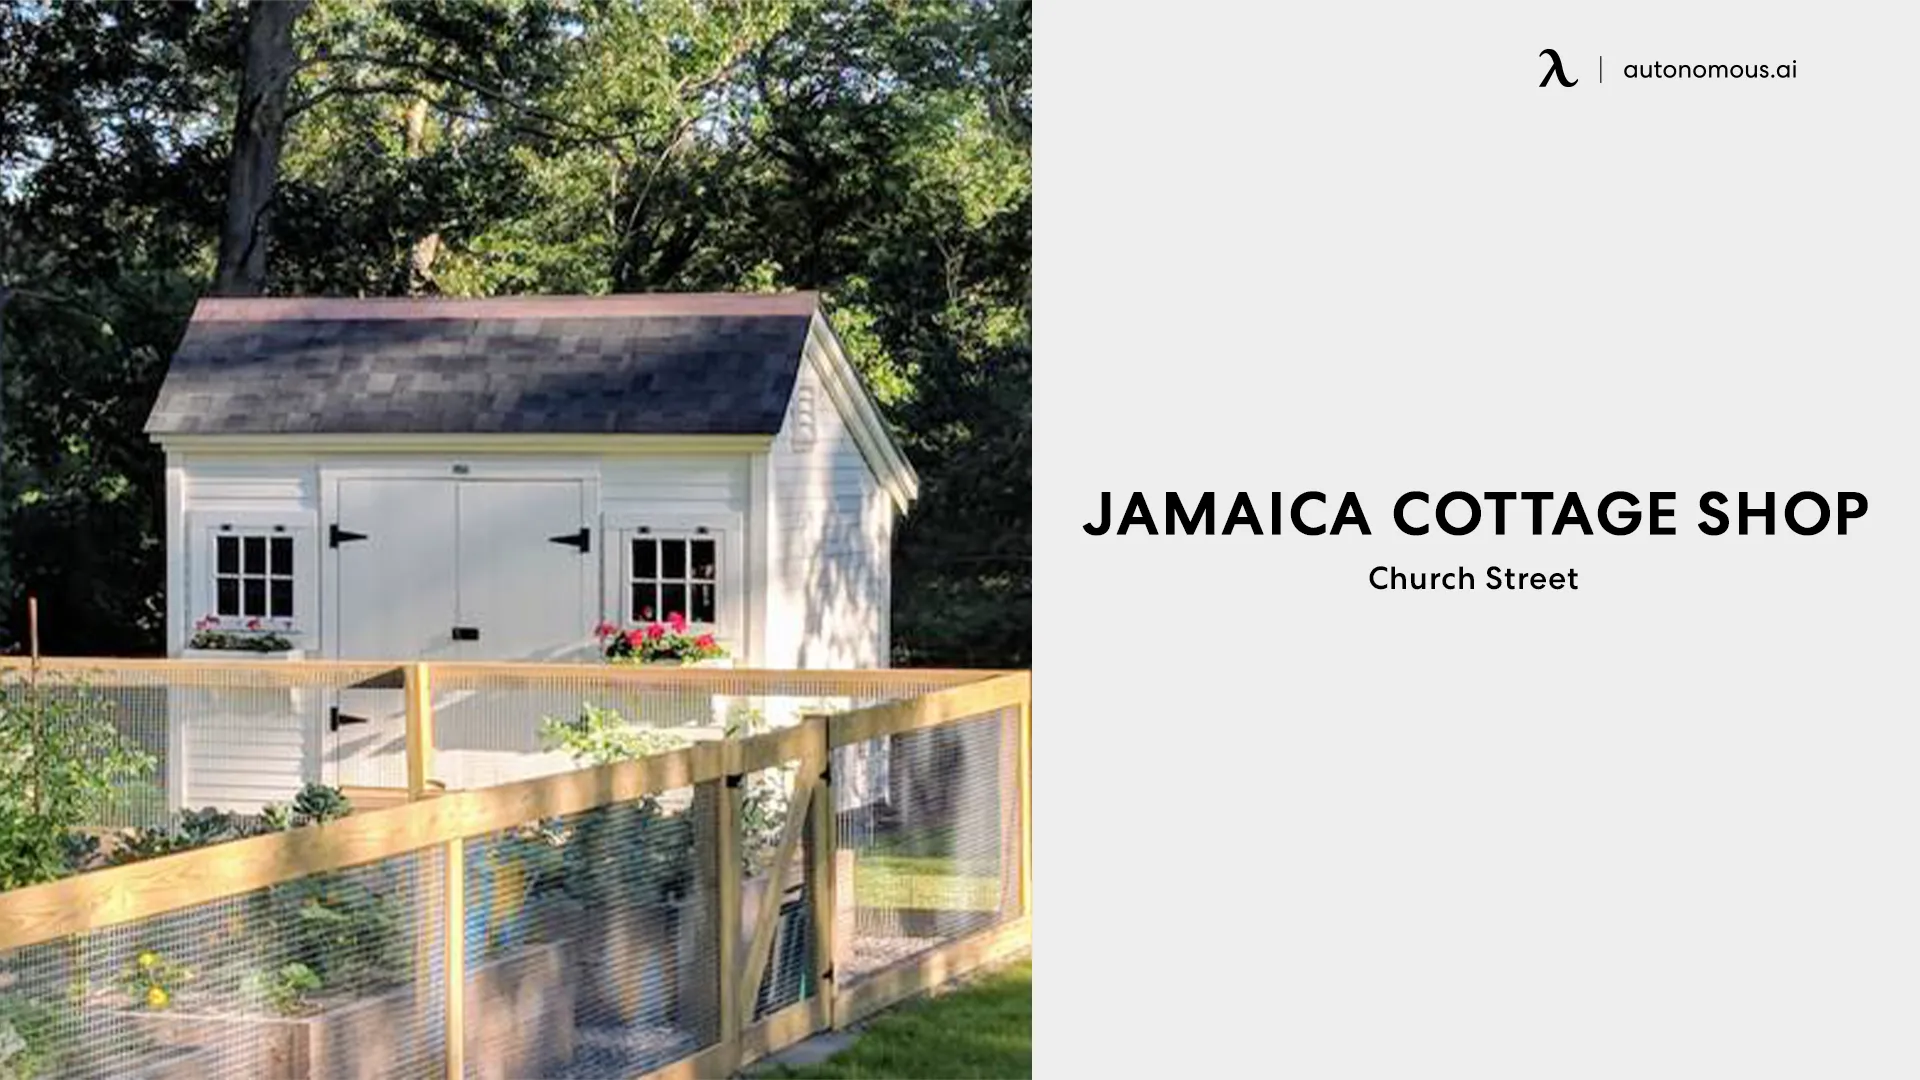 Jamaica Cottage Shop’s Church Street